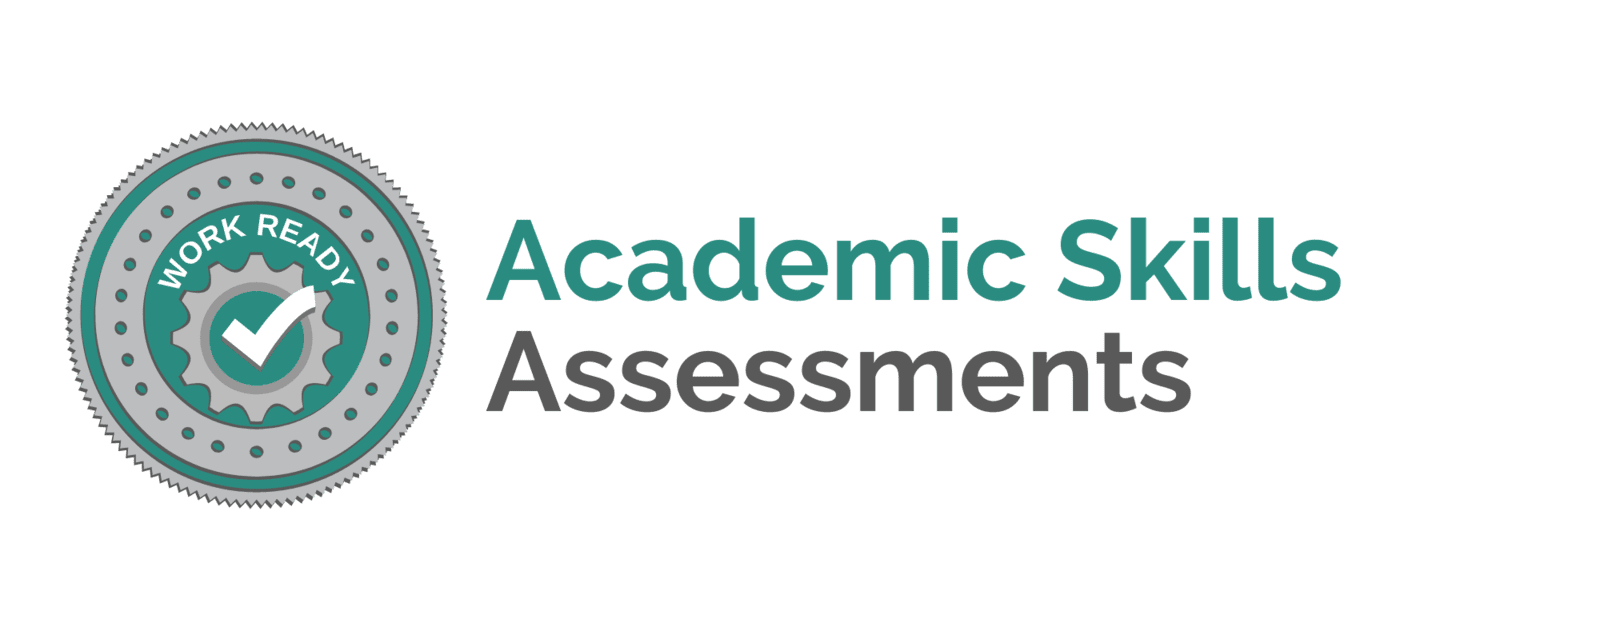 Academic Skills Assessments